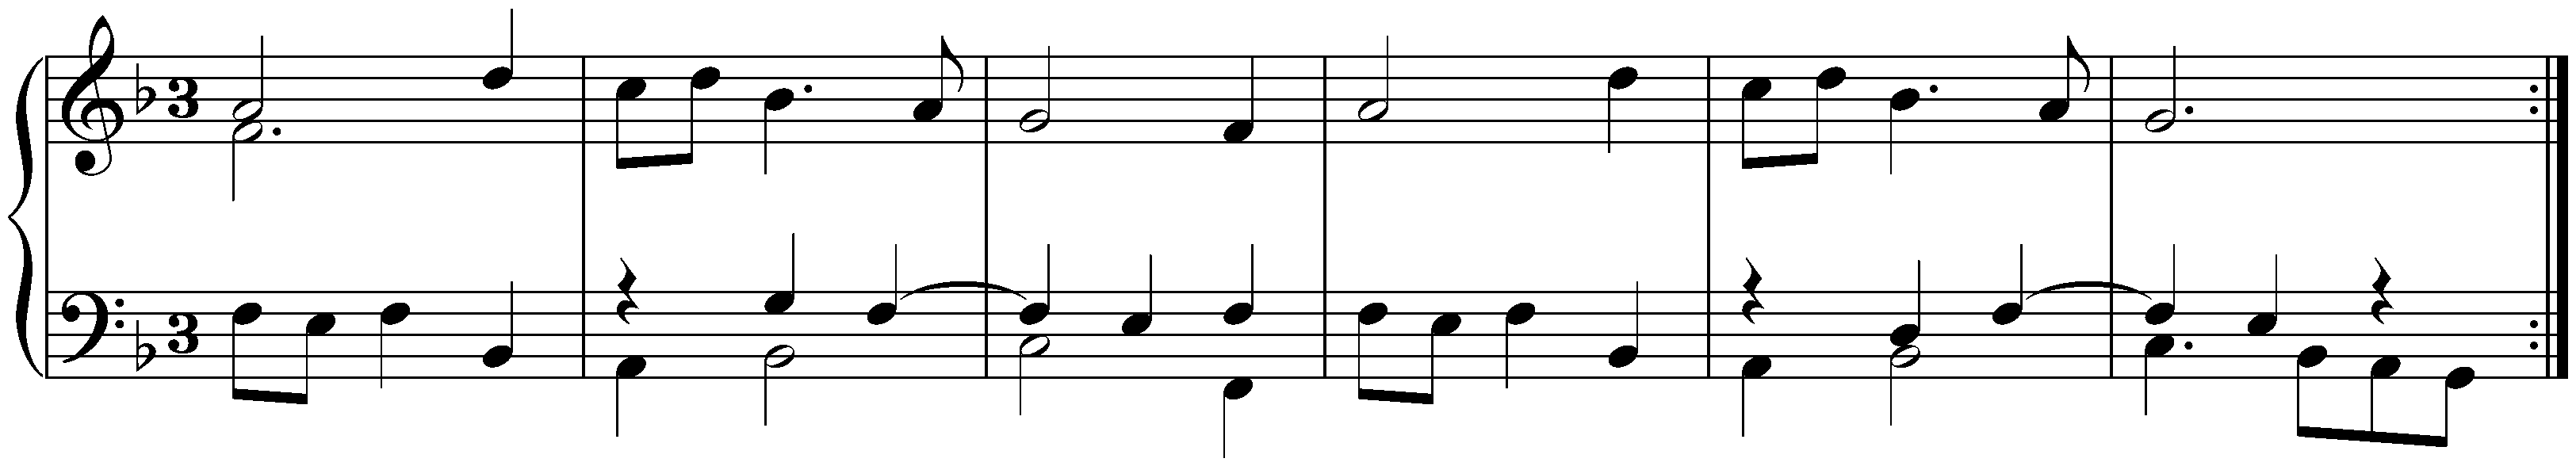 Overture (Suite) in F major, BWV 820; 3. Menuet – Trio